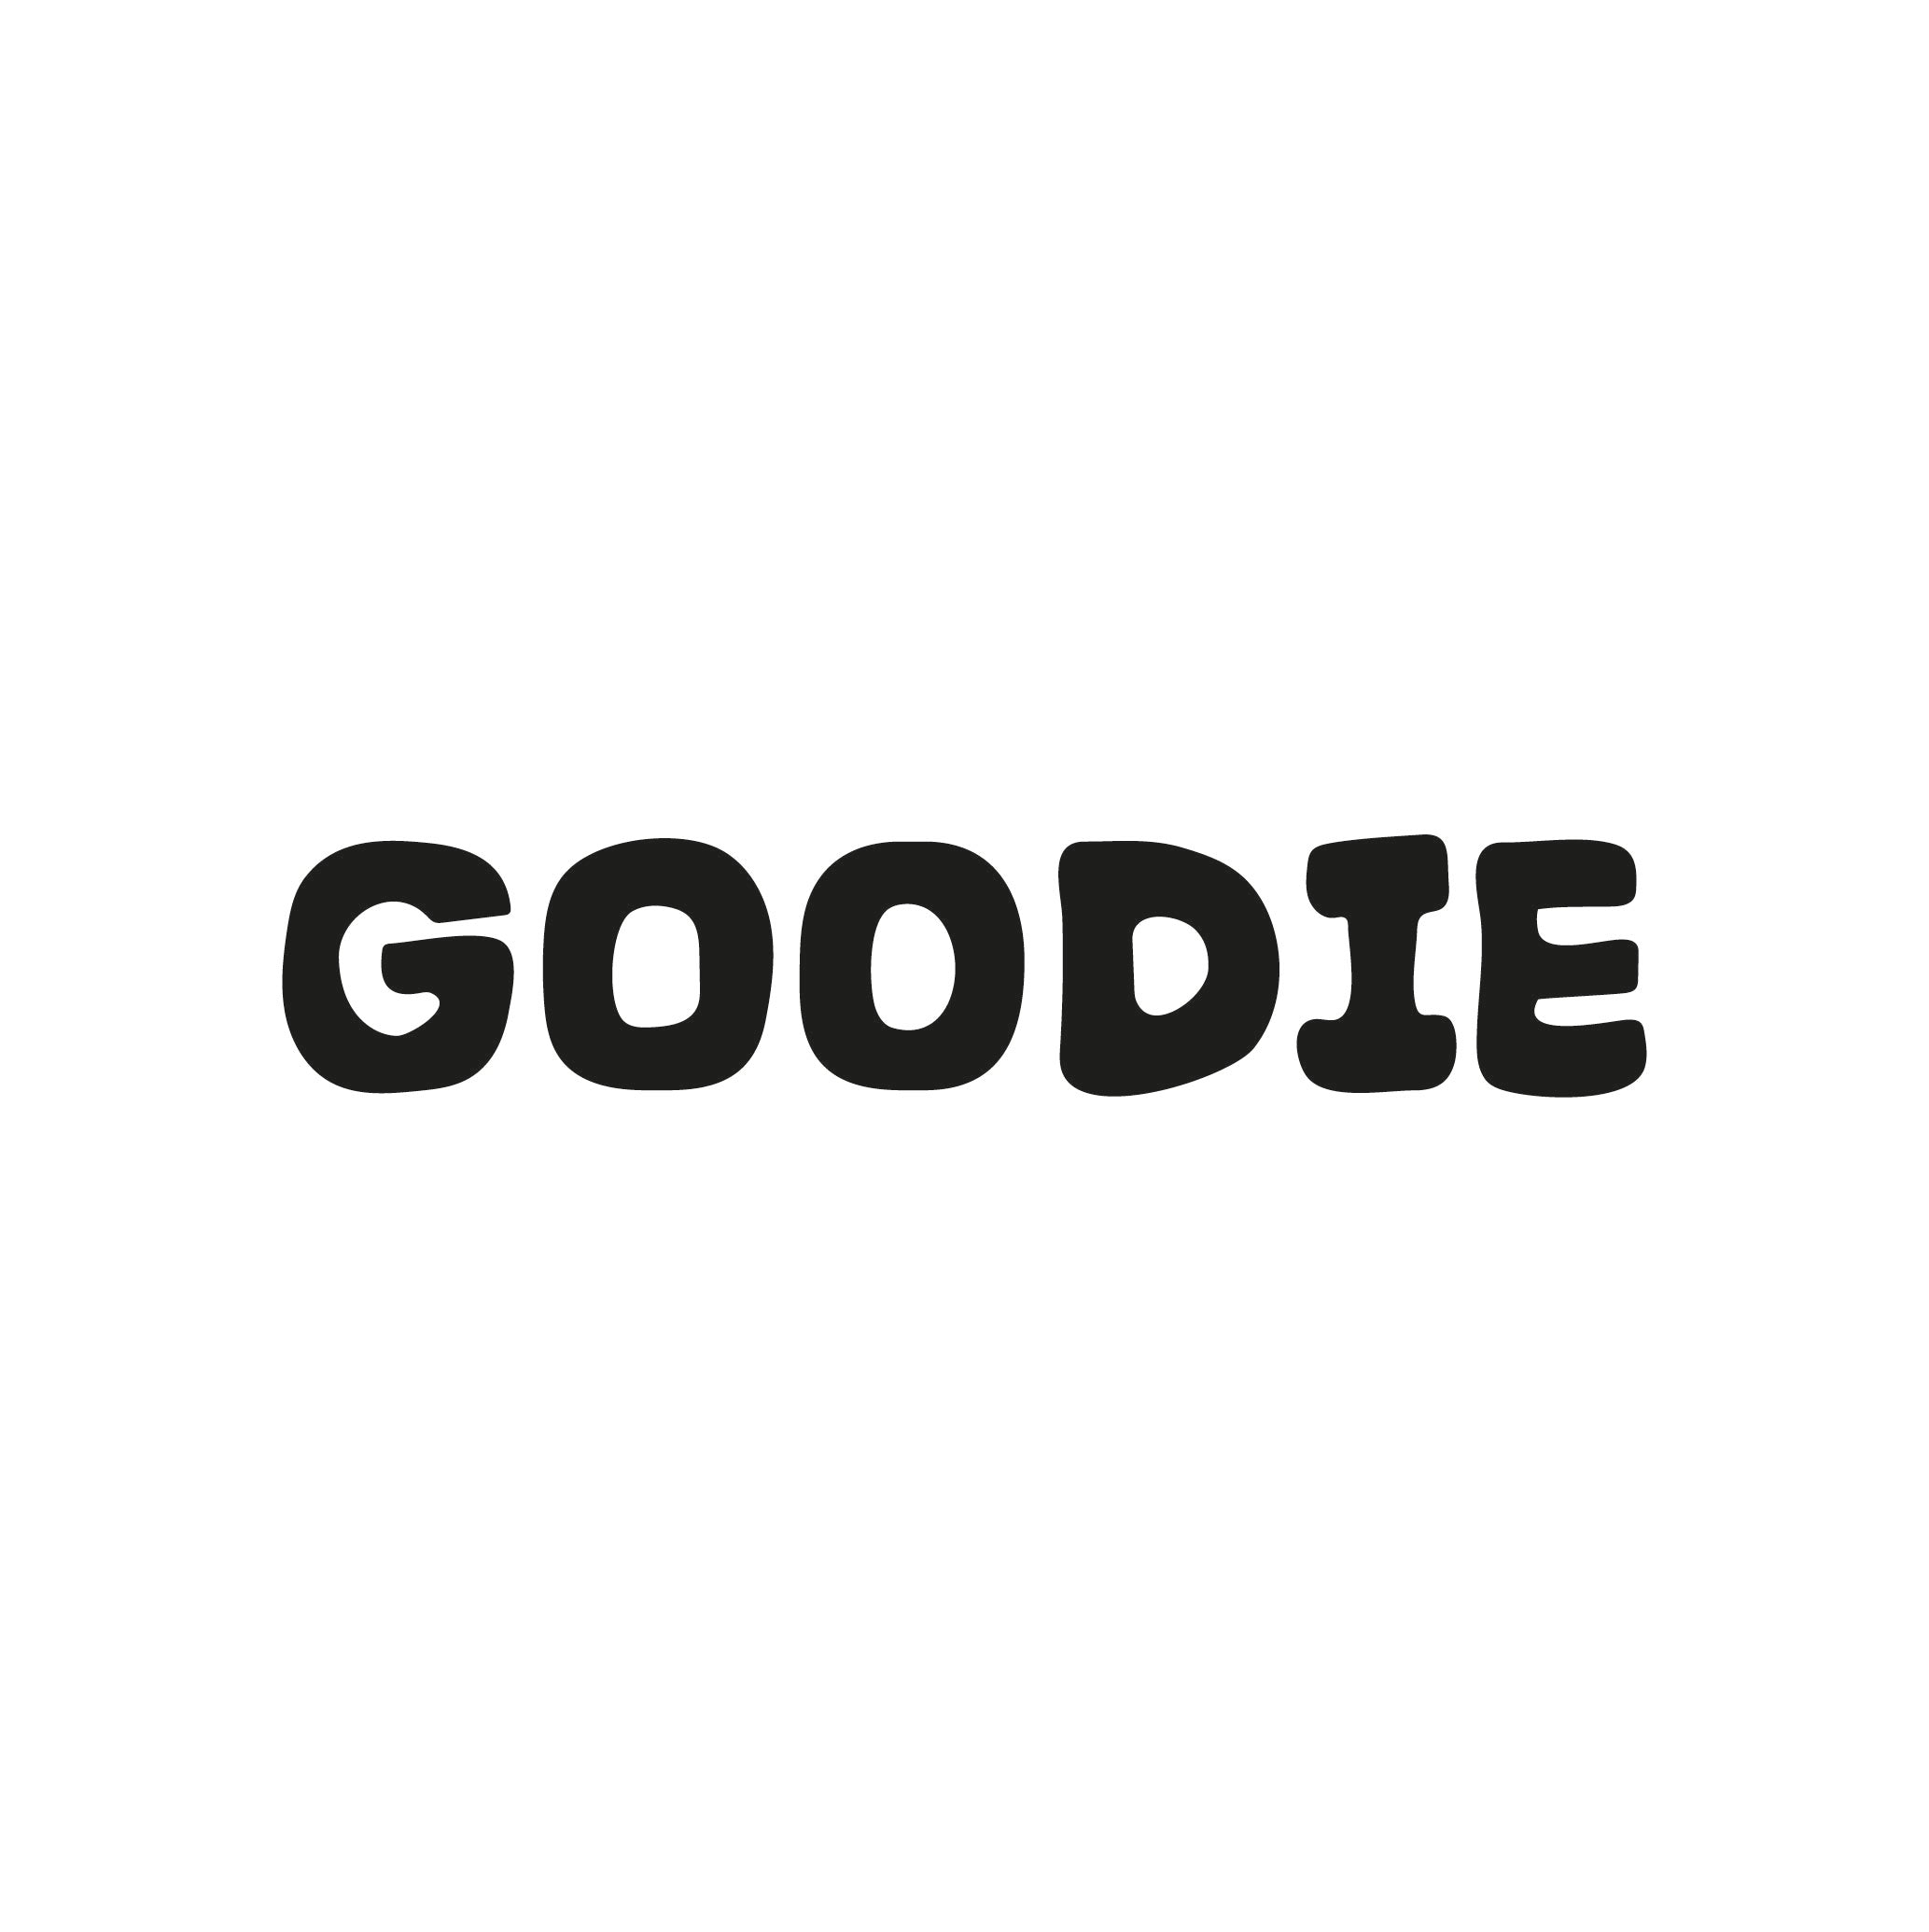 F. Goodie | Polab Instant Camera Shop